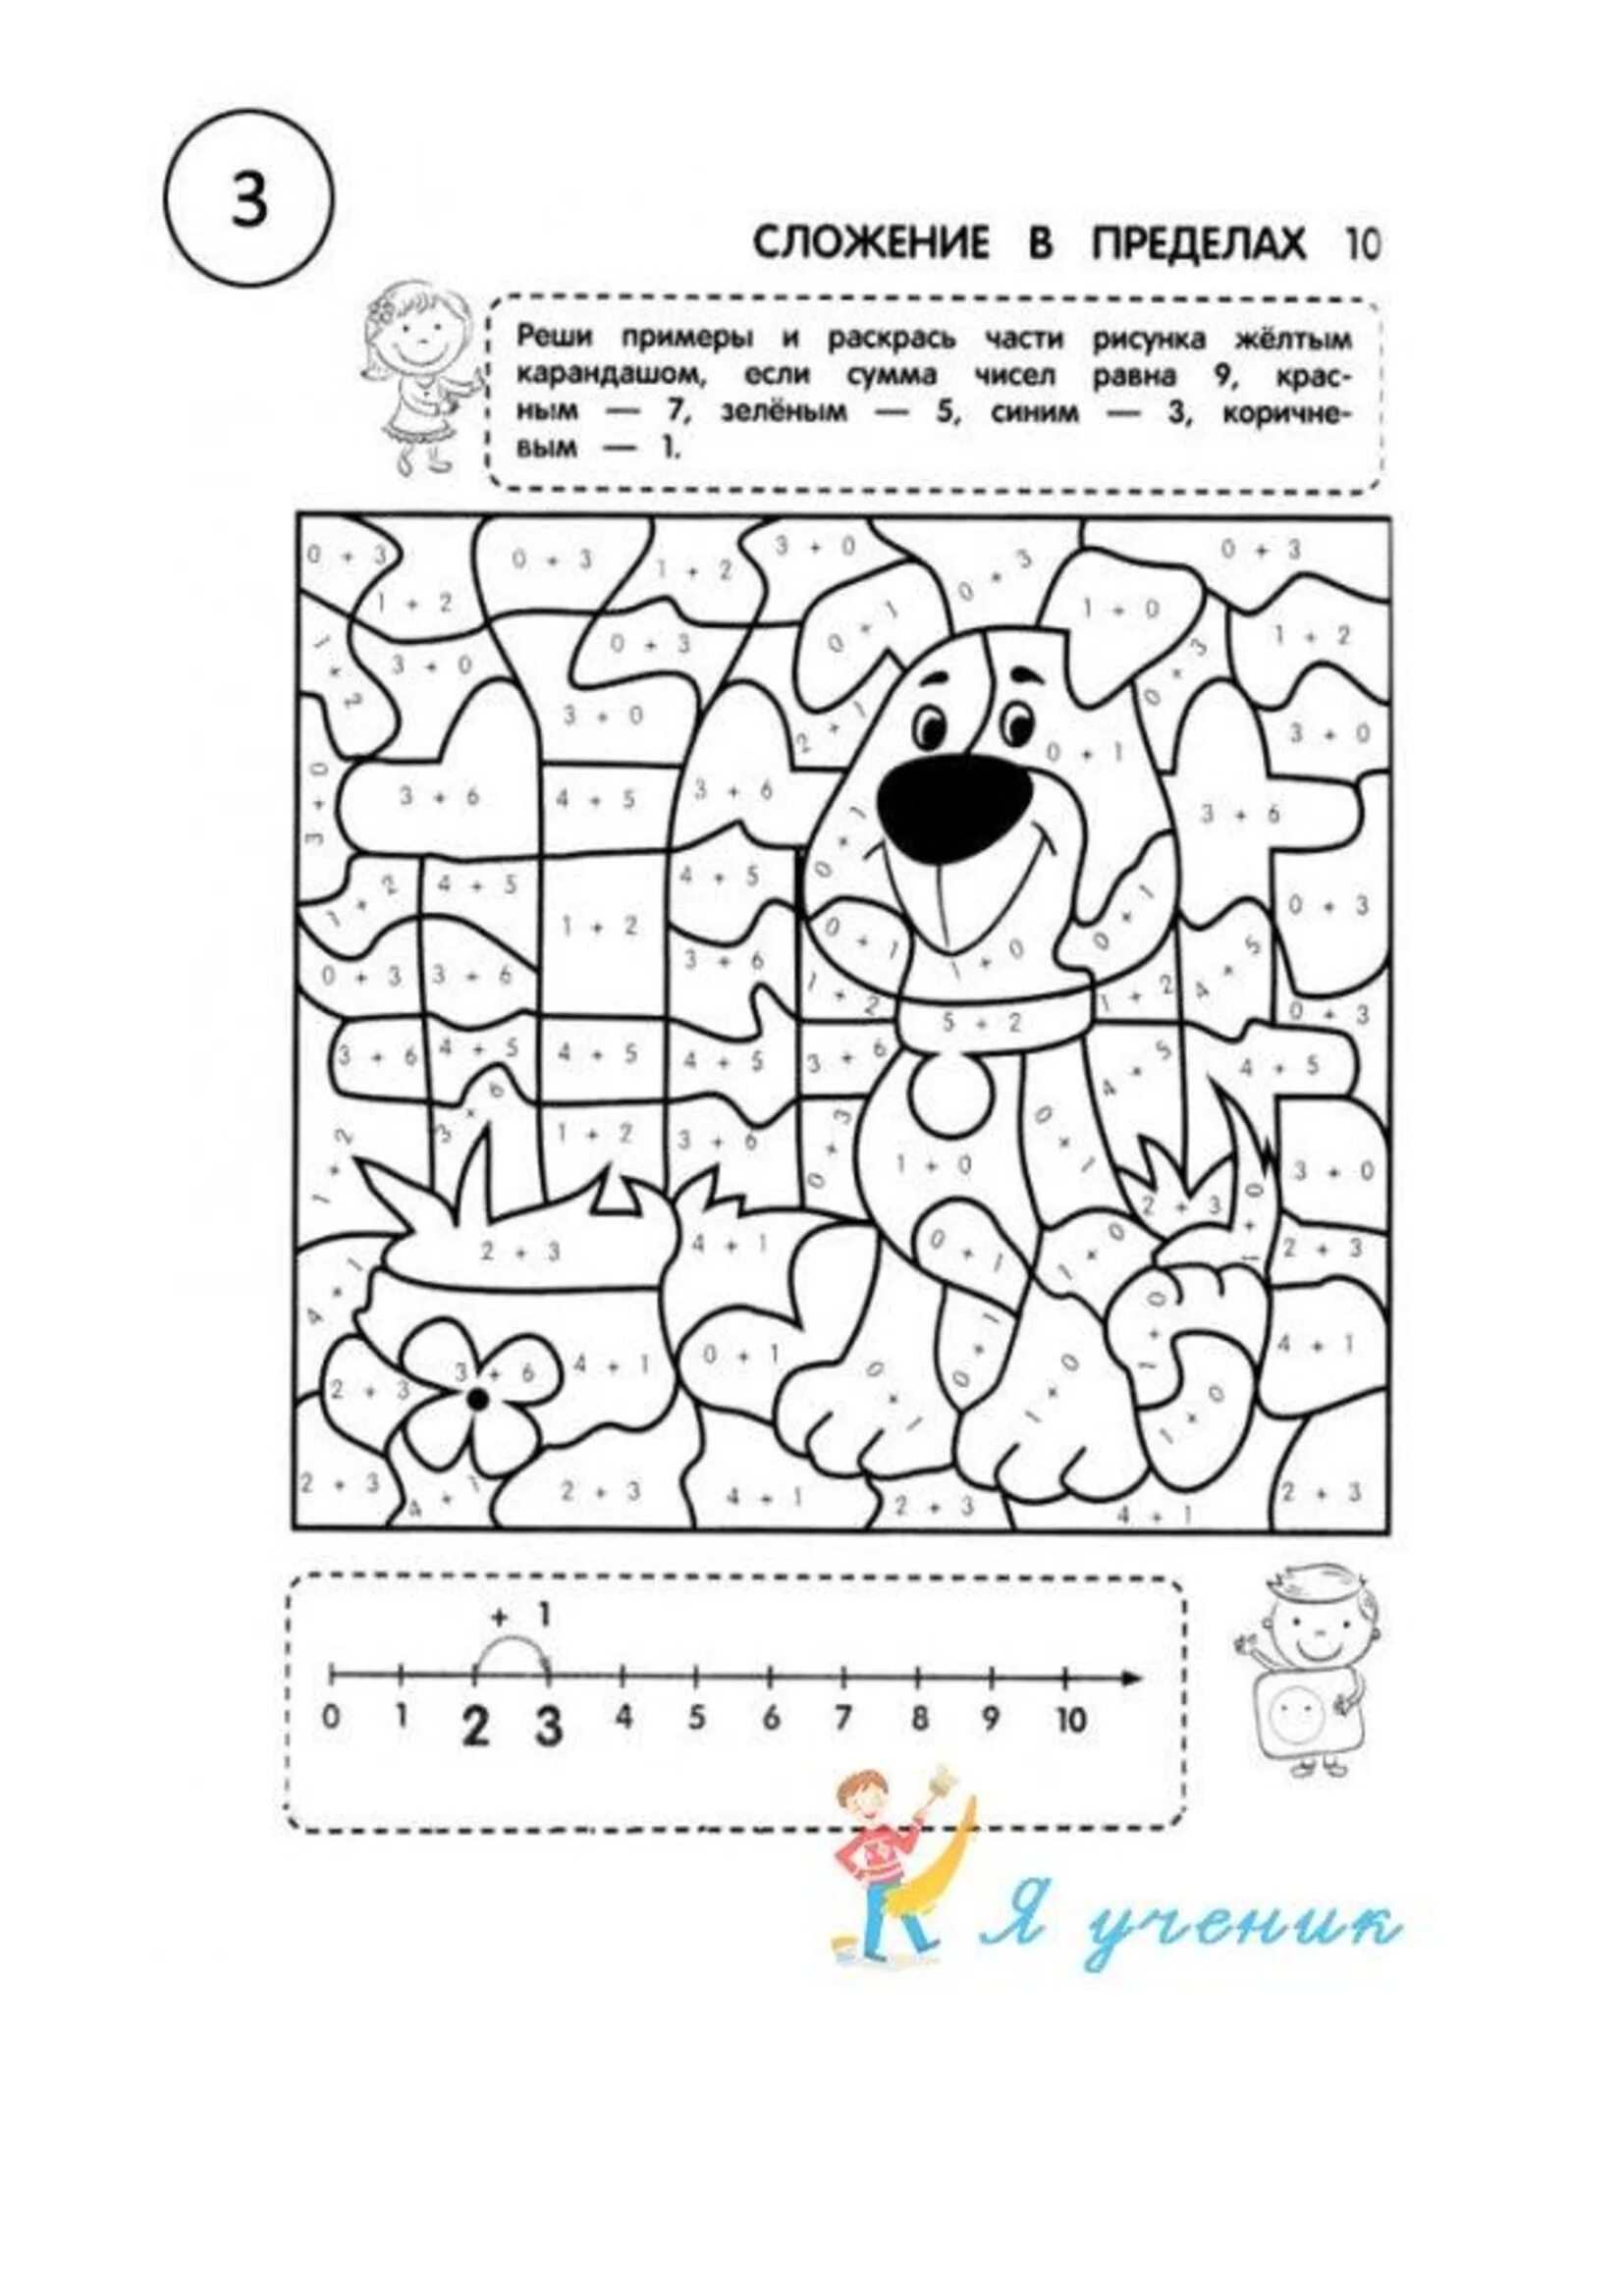 Fun coloring number 5 for preschoolers